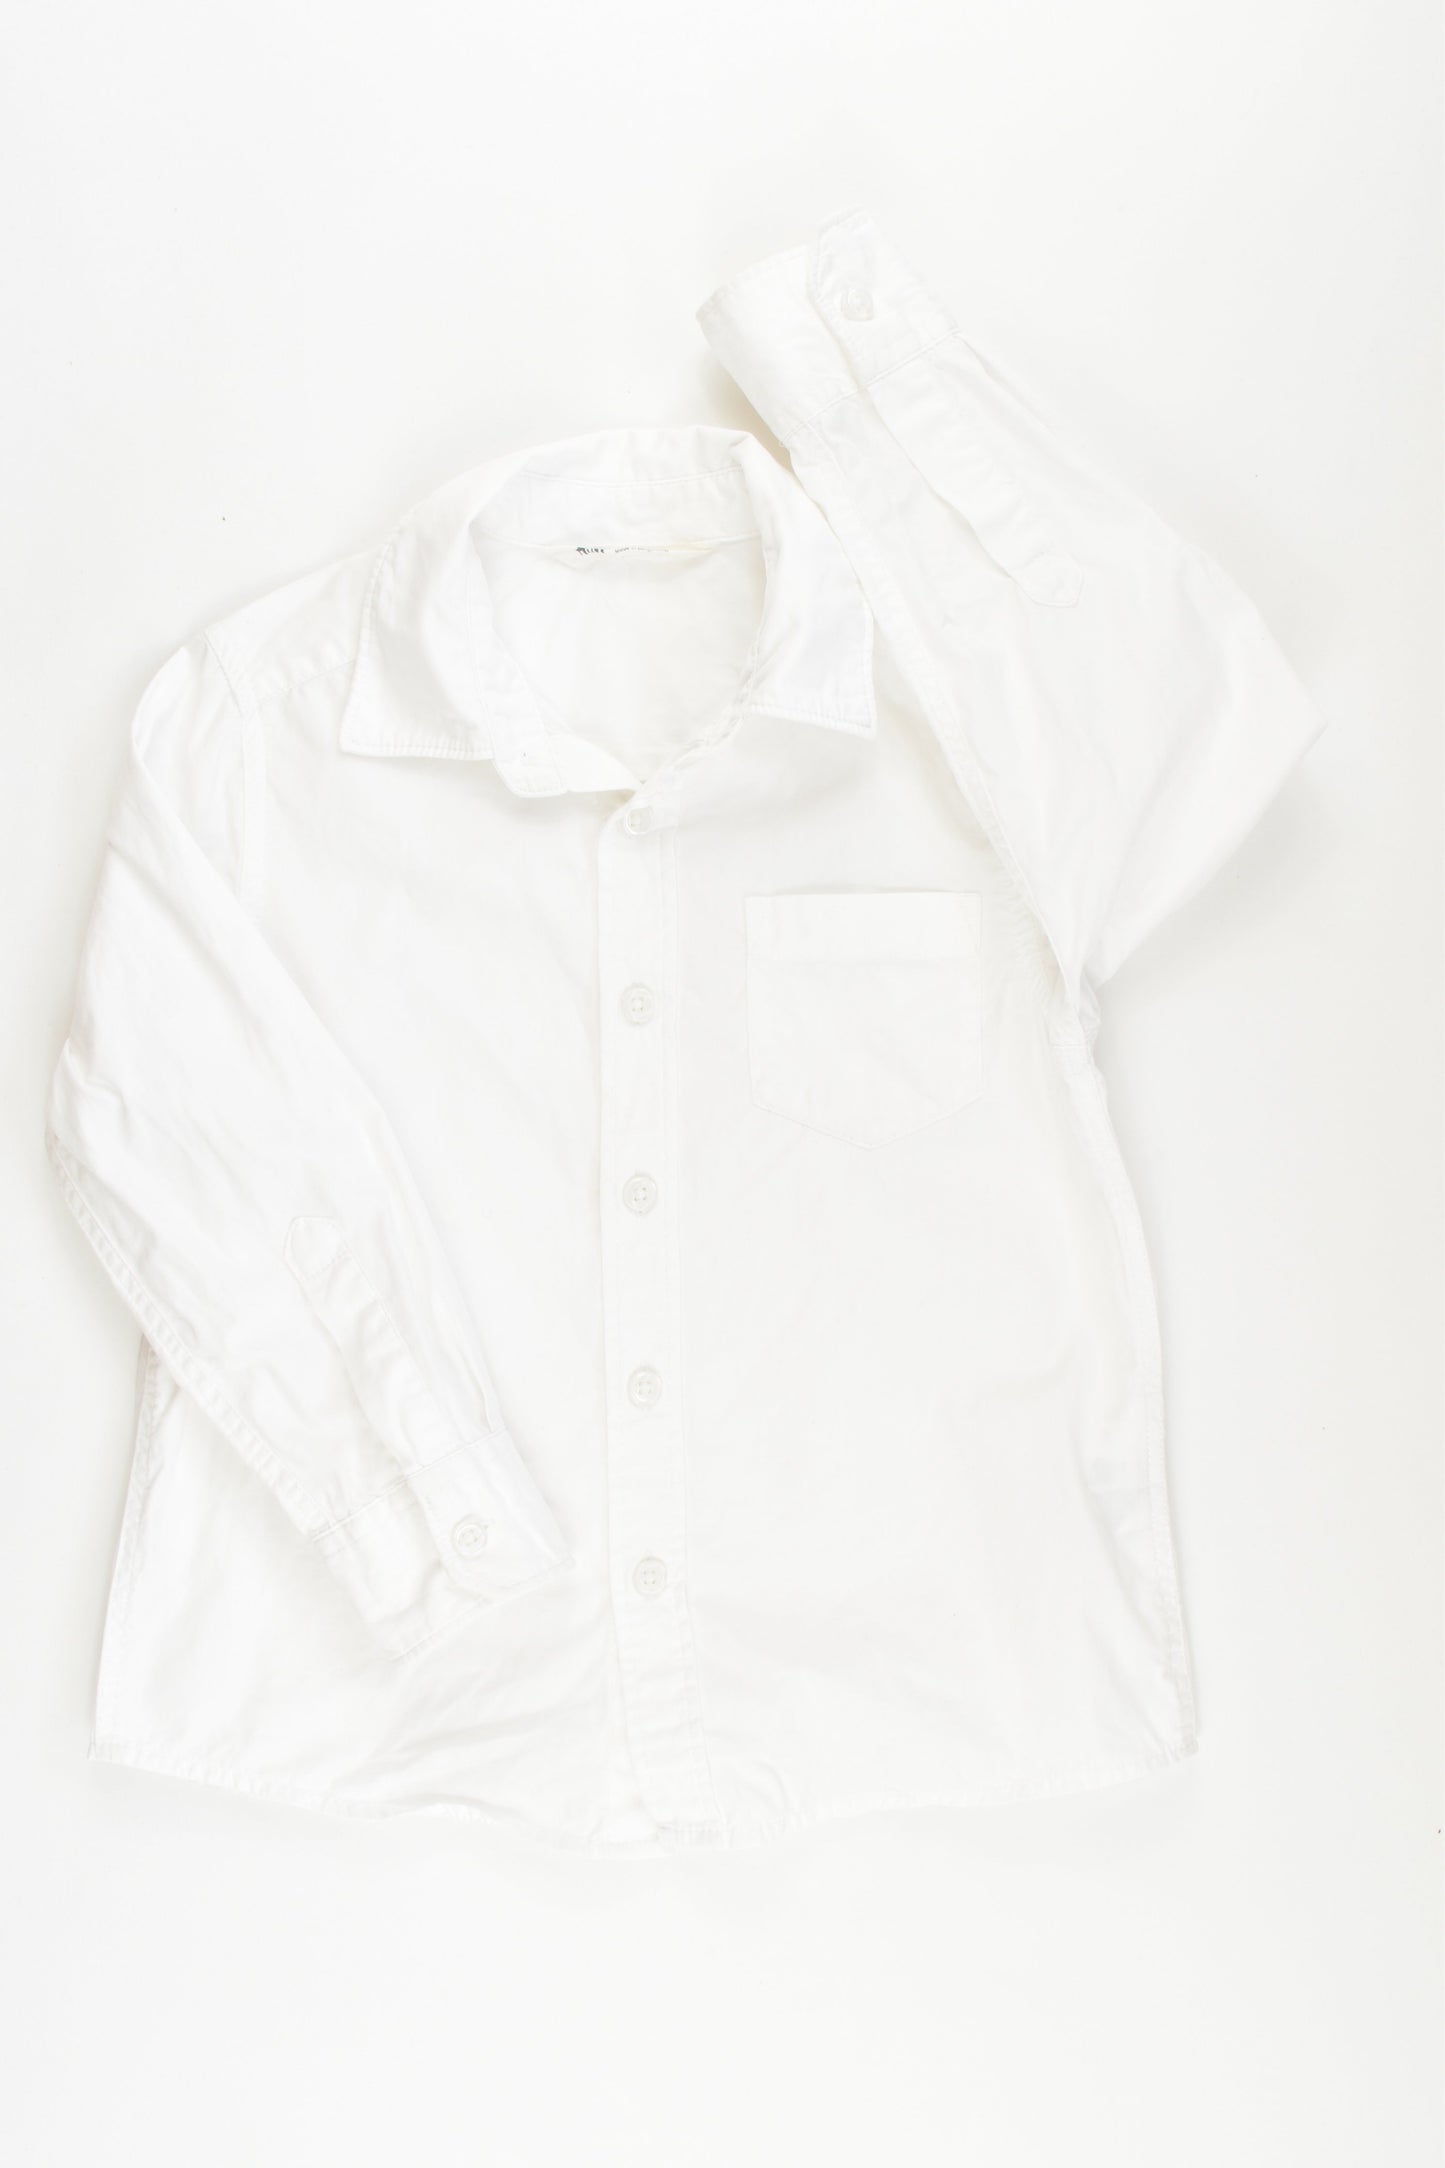 H&M Size 3-4 Collared Shirt